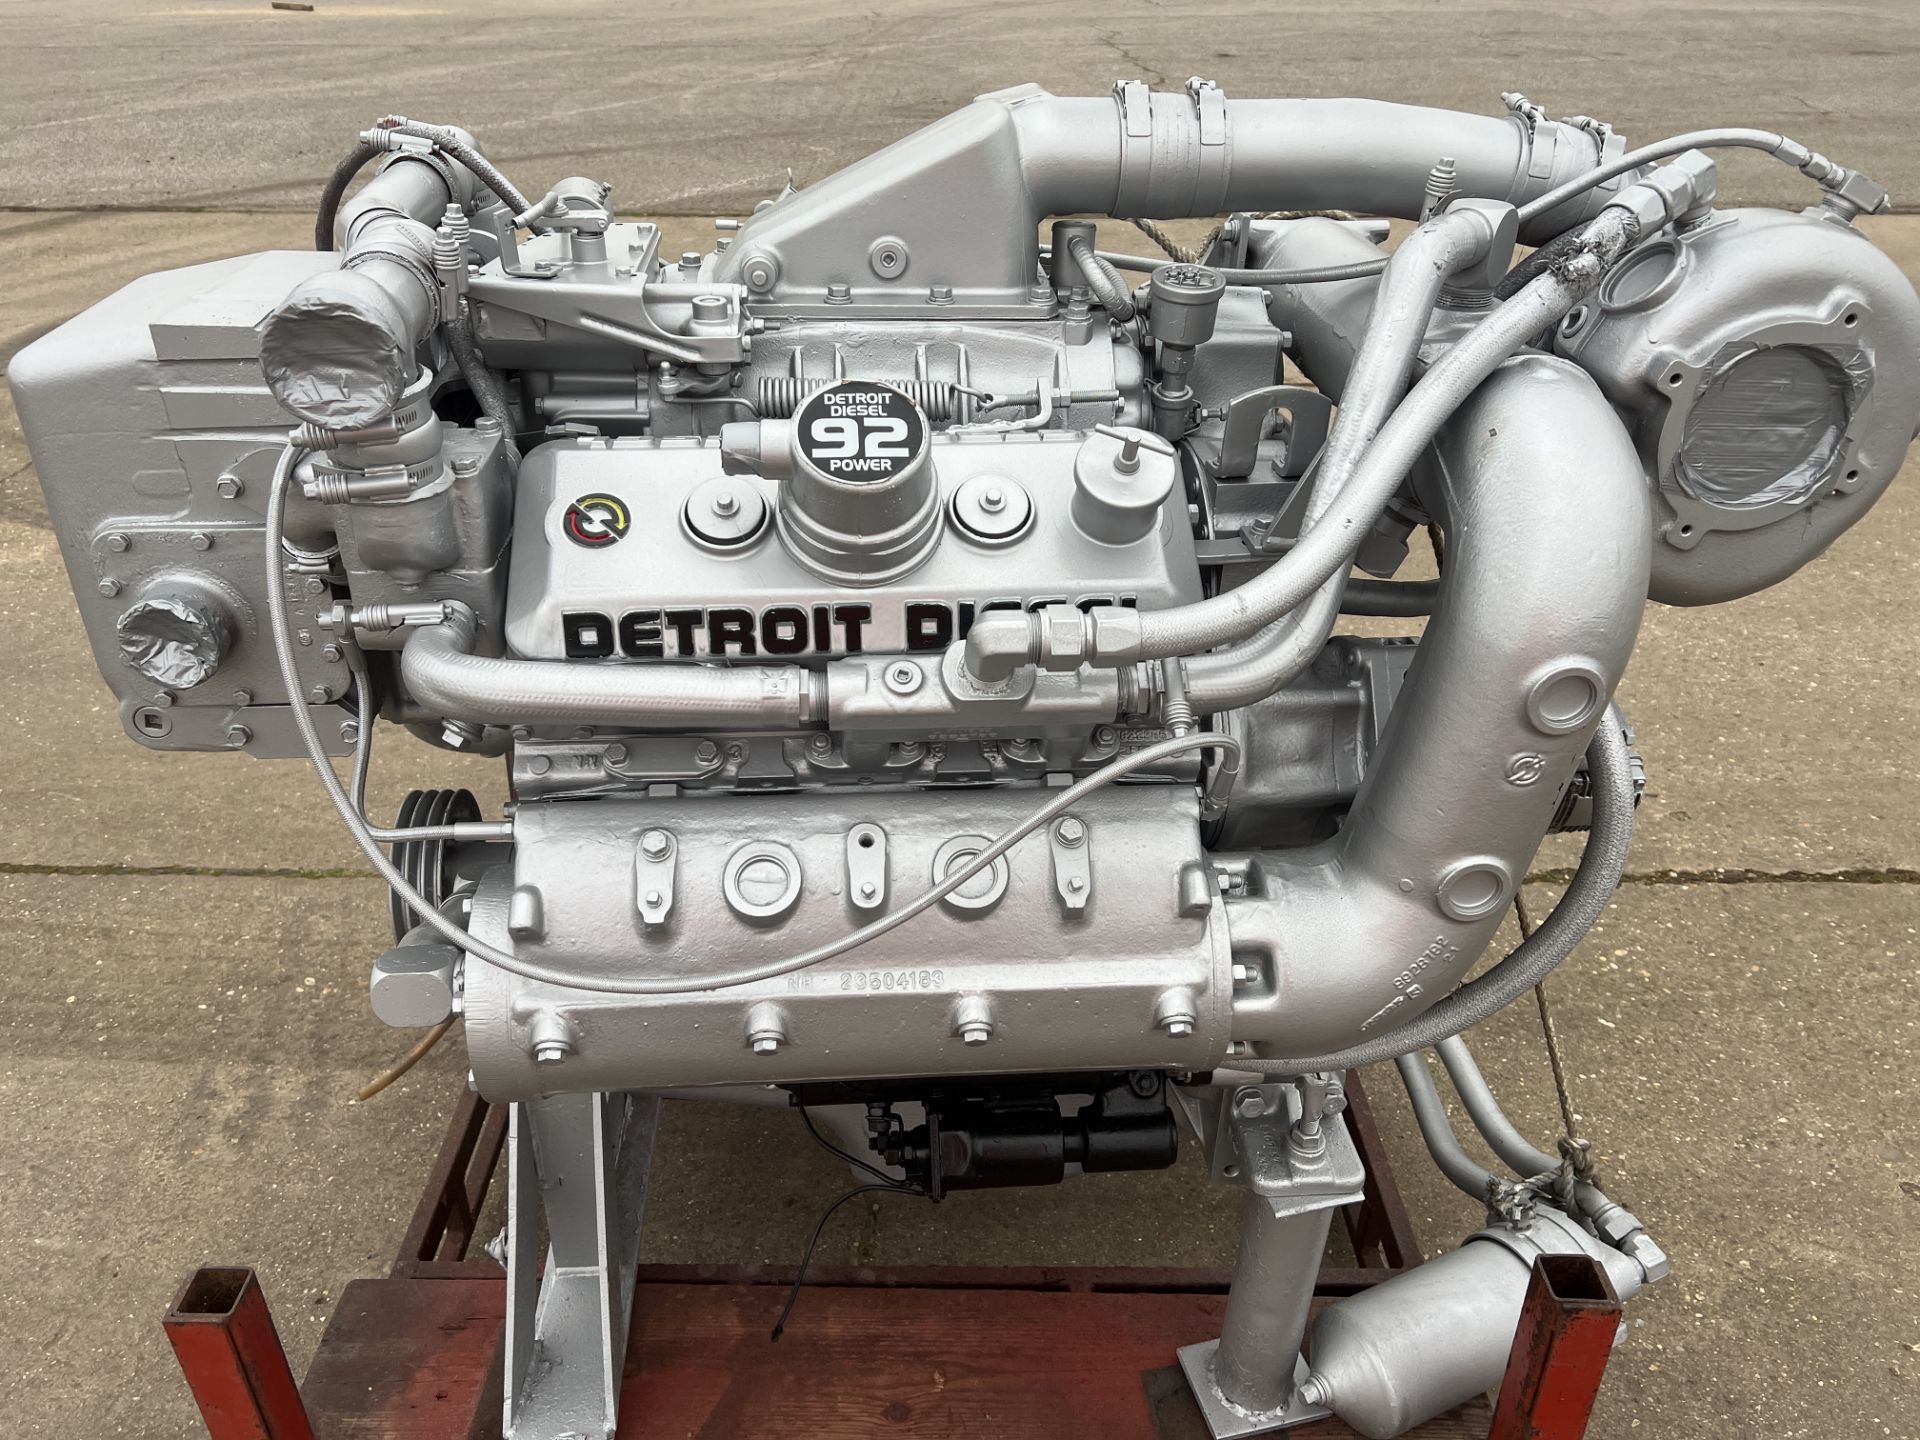 GM Detroit 6V92T Marine Diesel Engine Ex Standby - Image 3 of 8